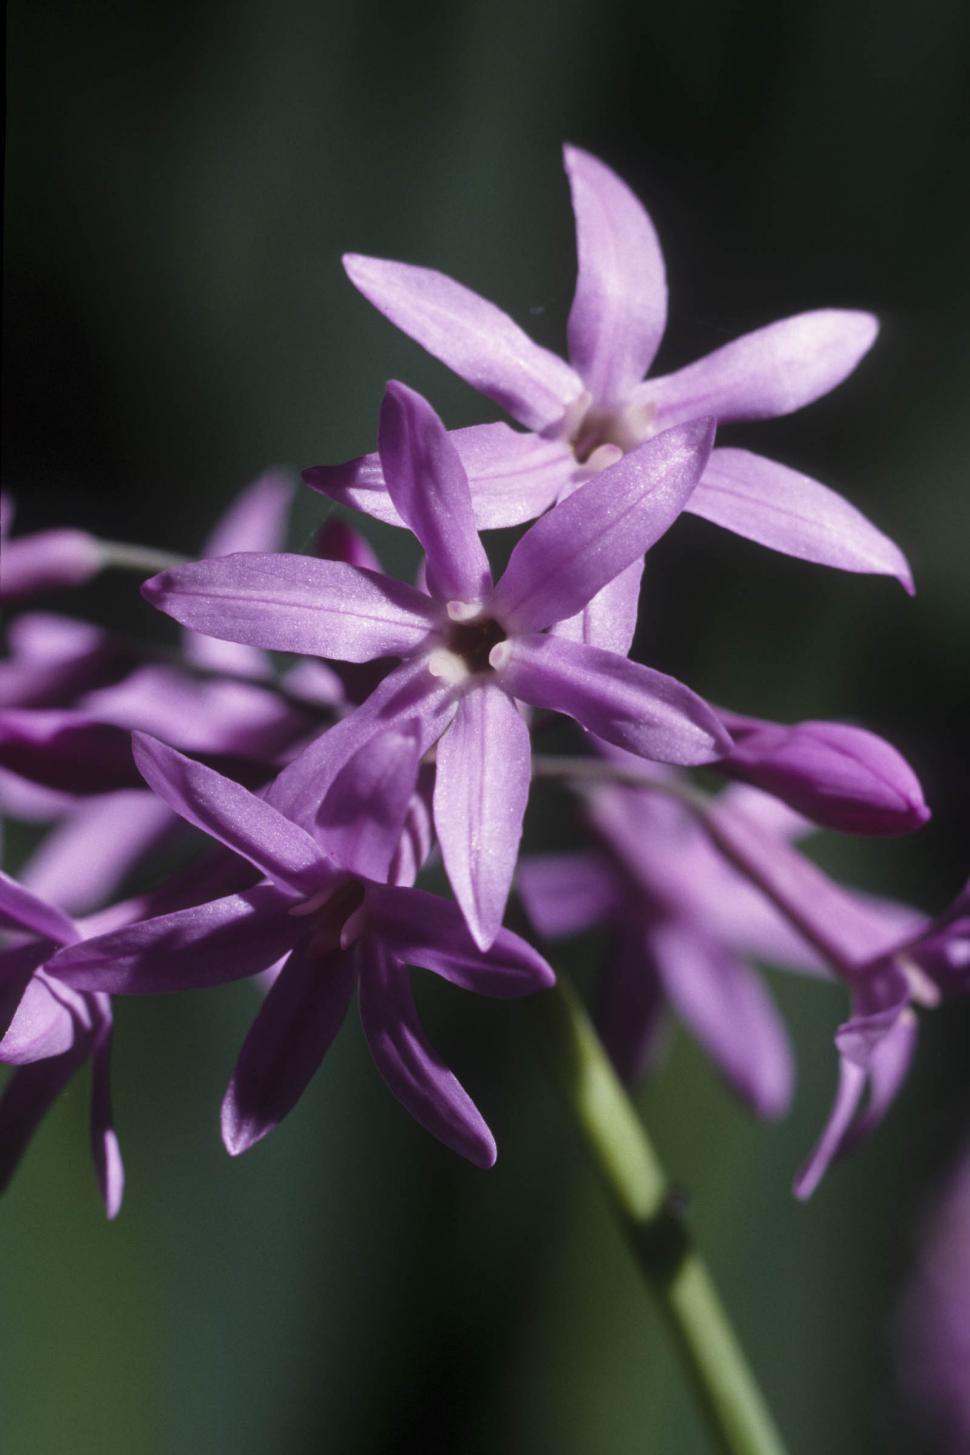 Free Image of purple flower cluseter 